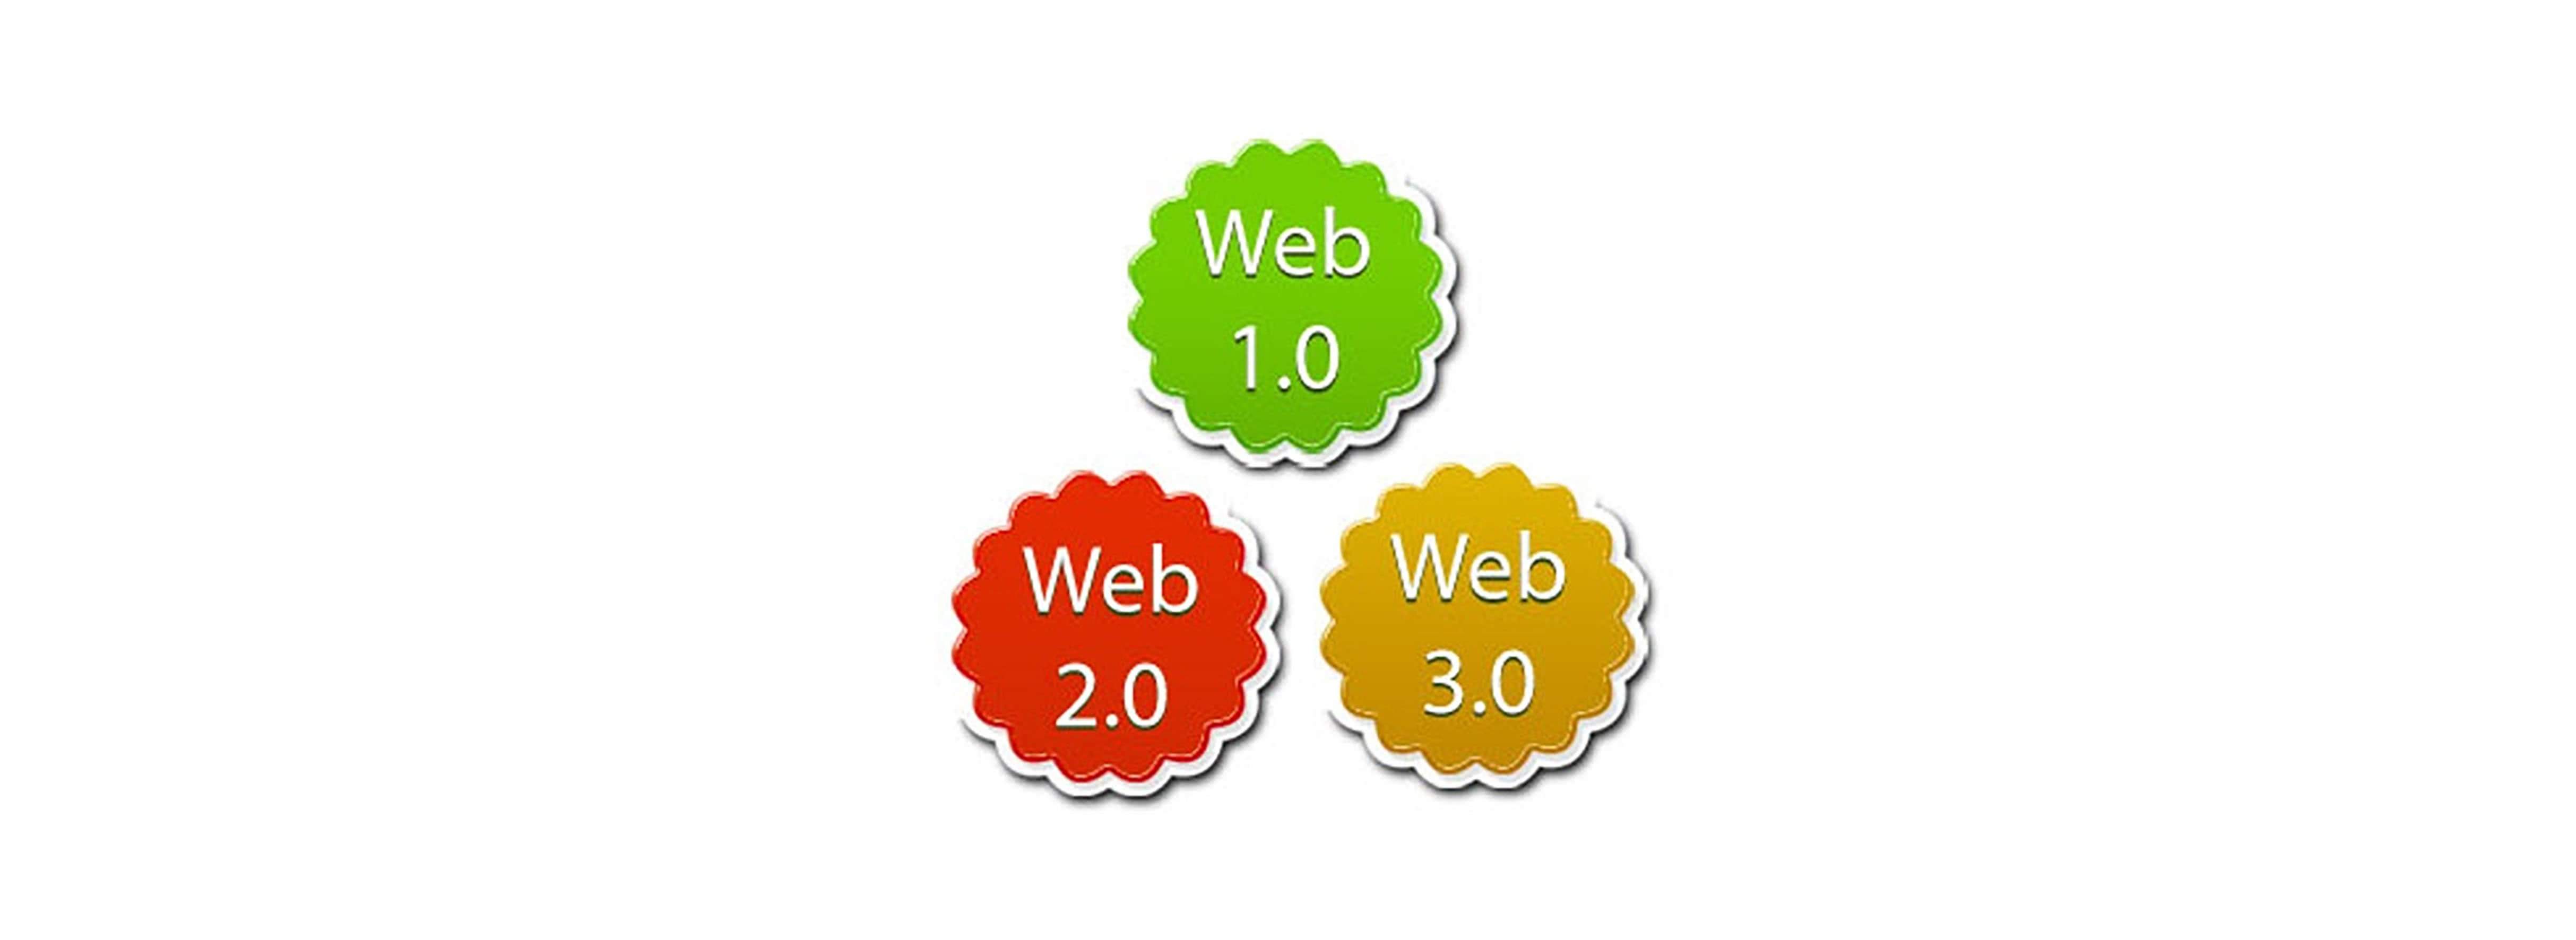 1 0.0001. Технологии web 2.0. Технология web 3.0. Web 2 web 3. Web 1.0 web 2.0 web 3.0.